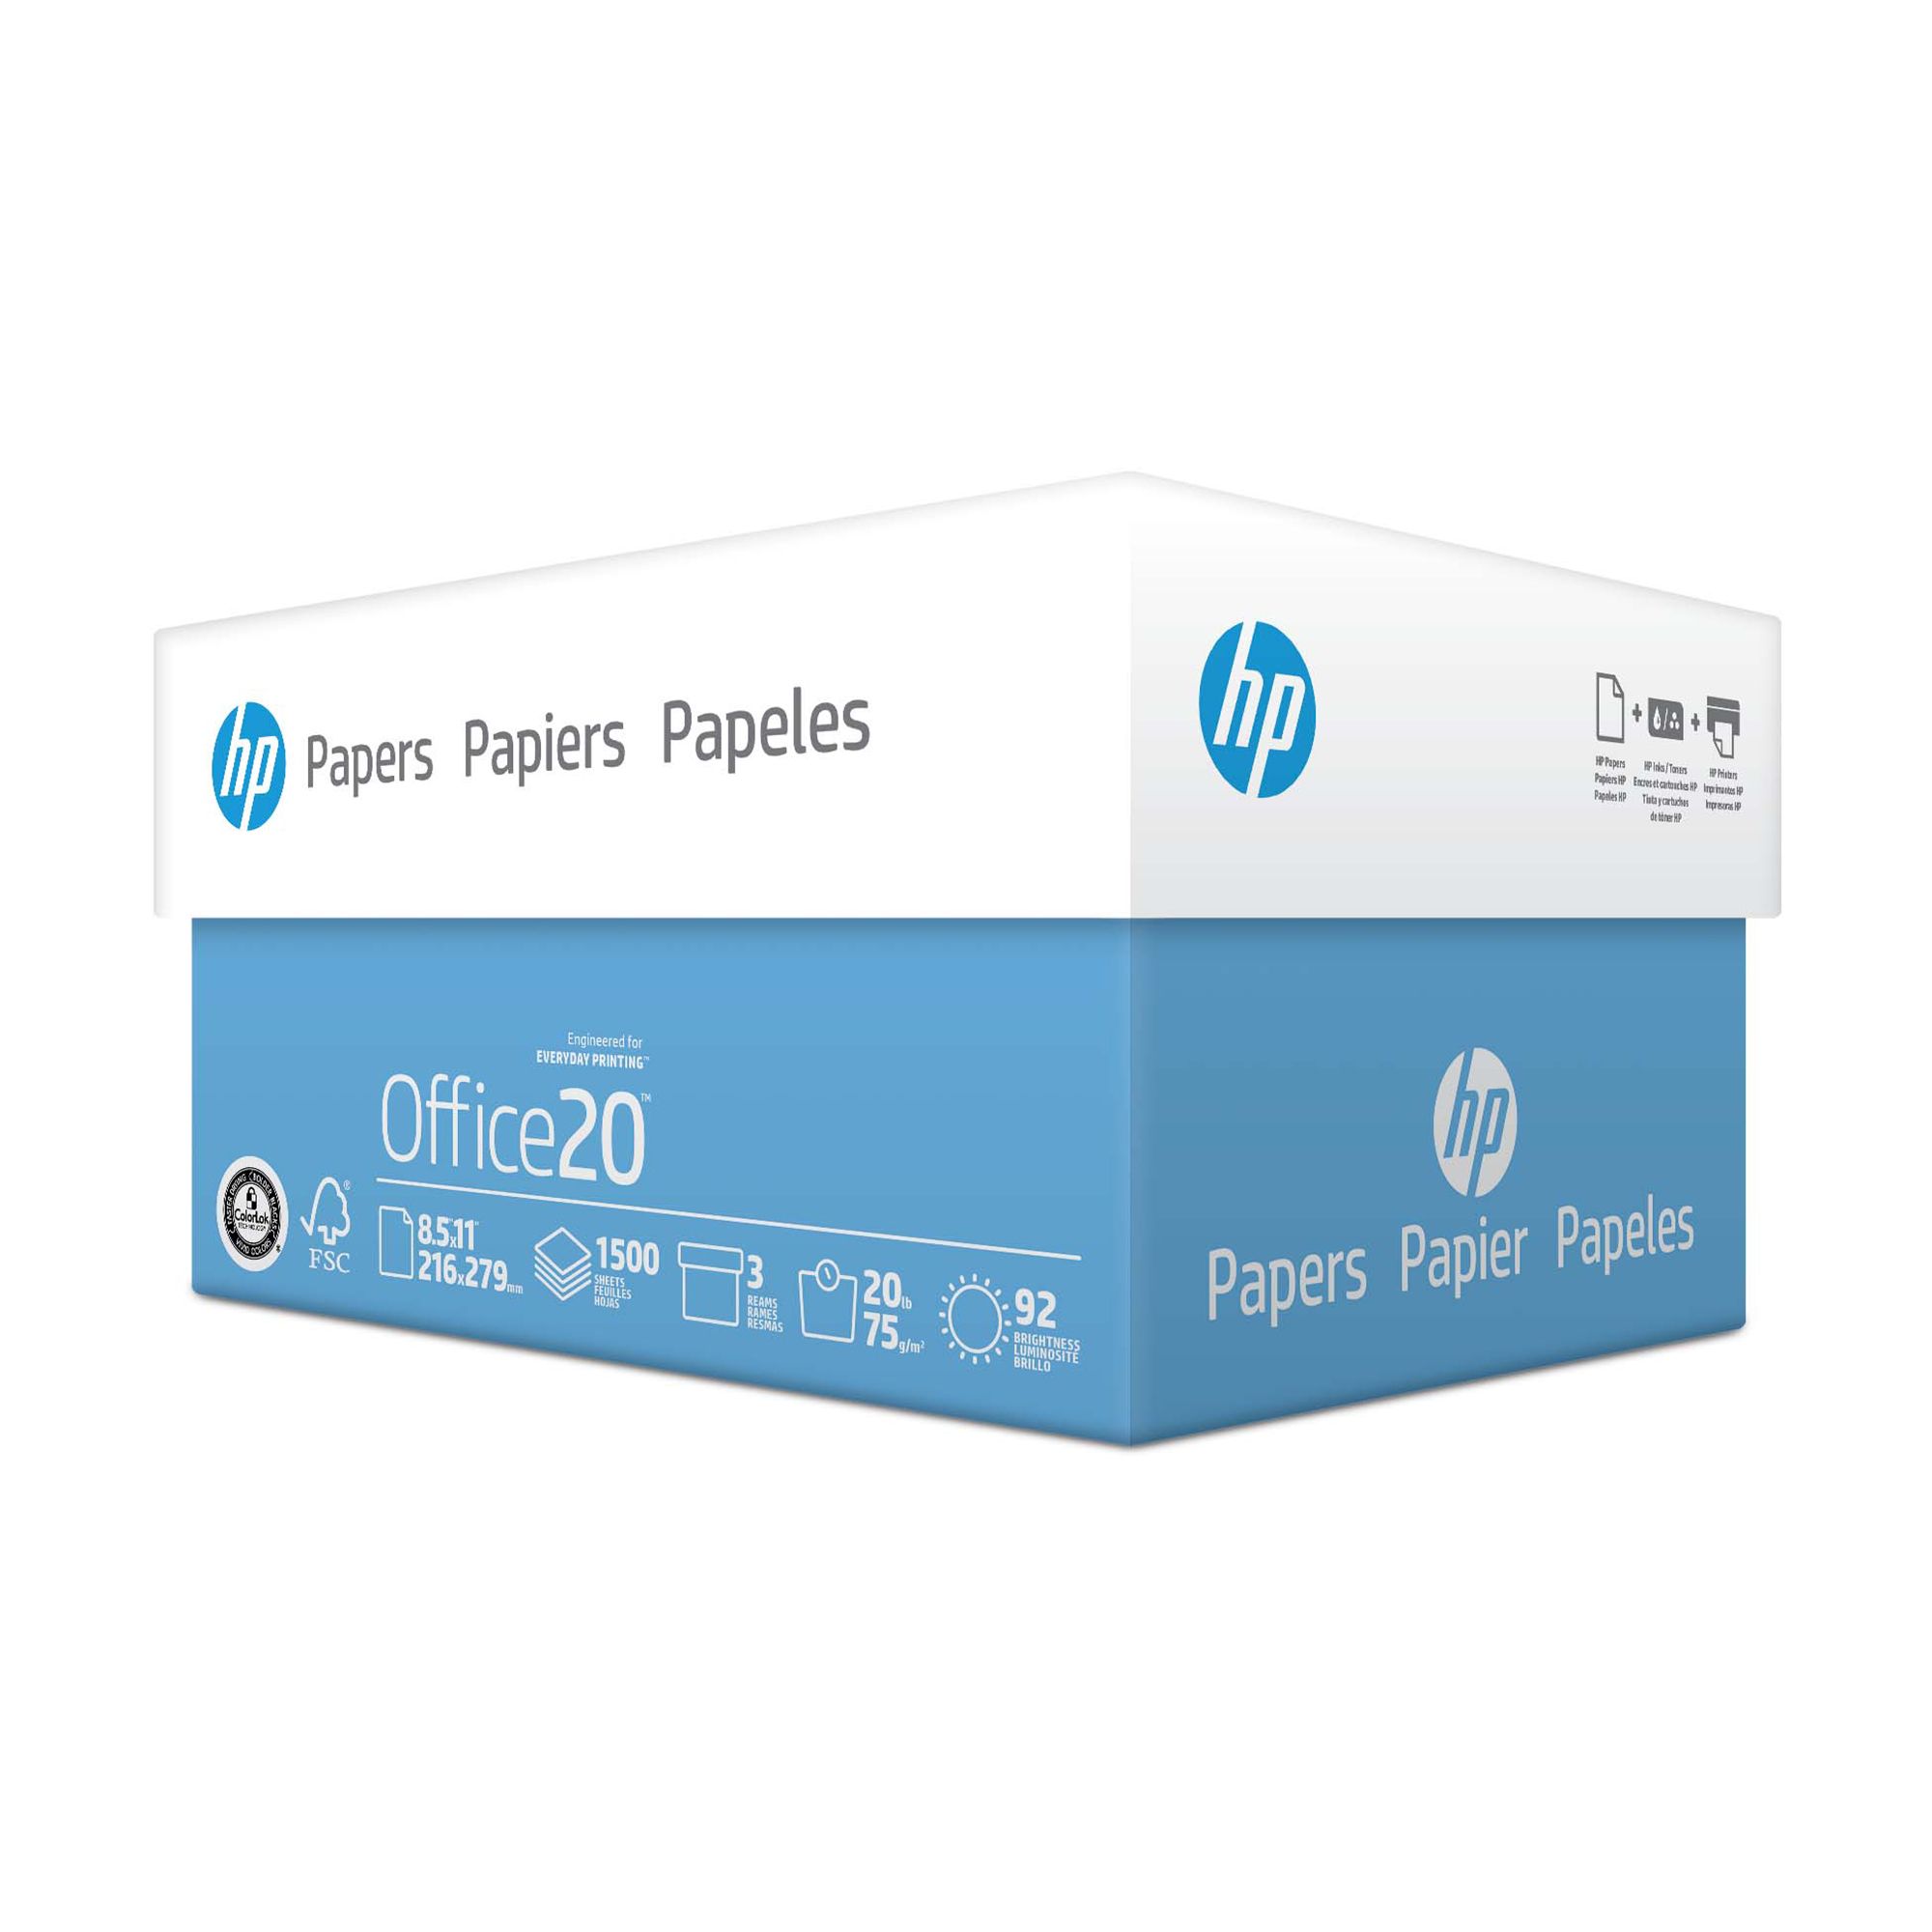 Buy HP Everyday A4 Printer Paper - 500 Sheets, Printer paper